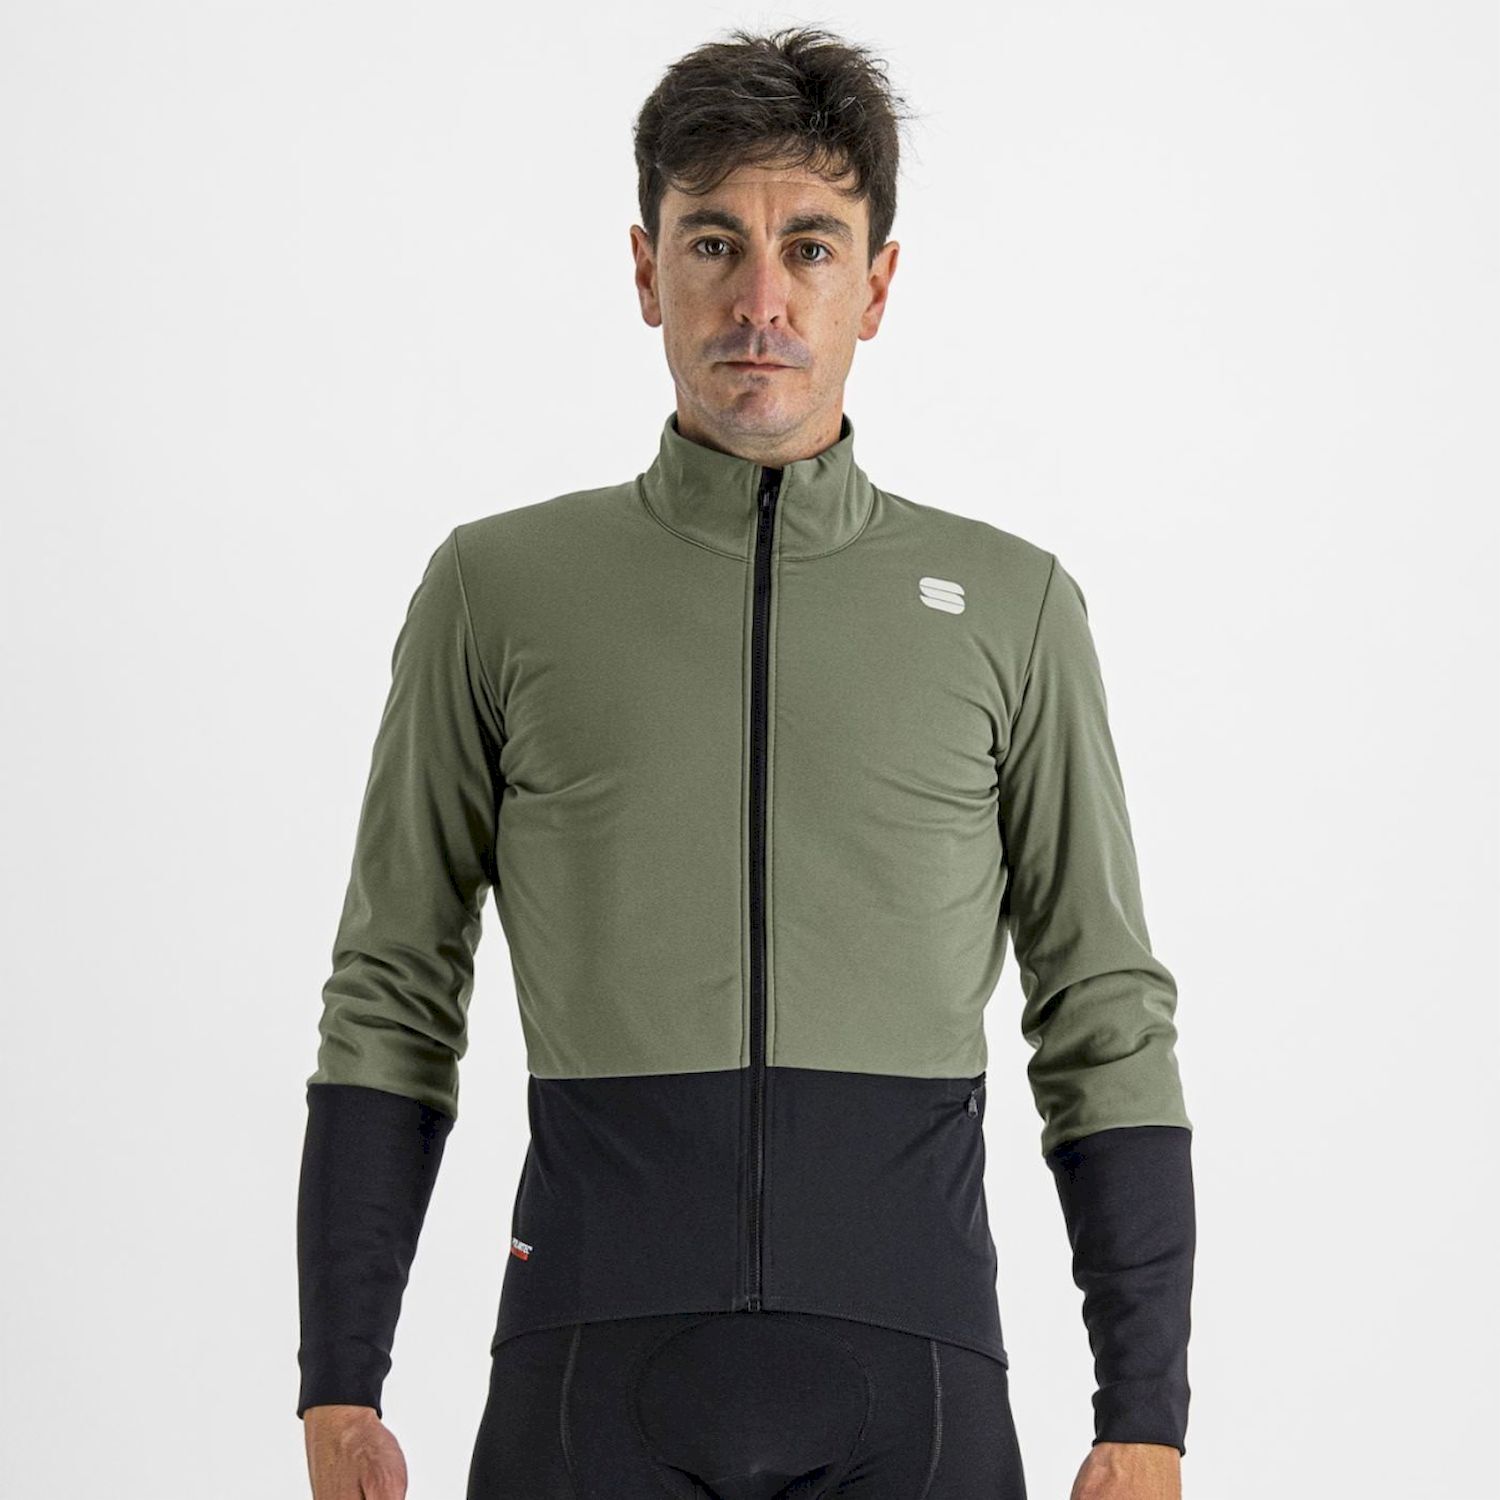 Sportful Total Comfort Jacket - Cycling jacket - Men's